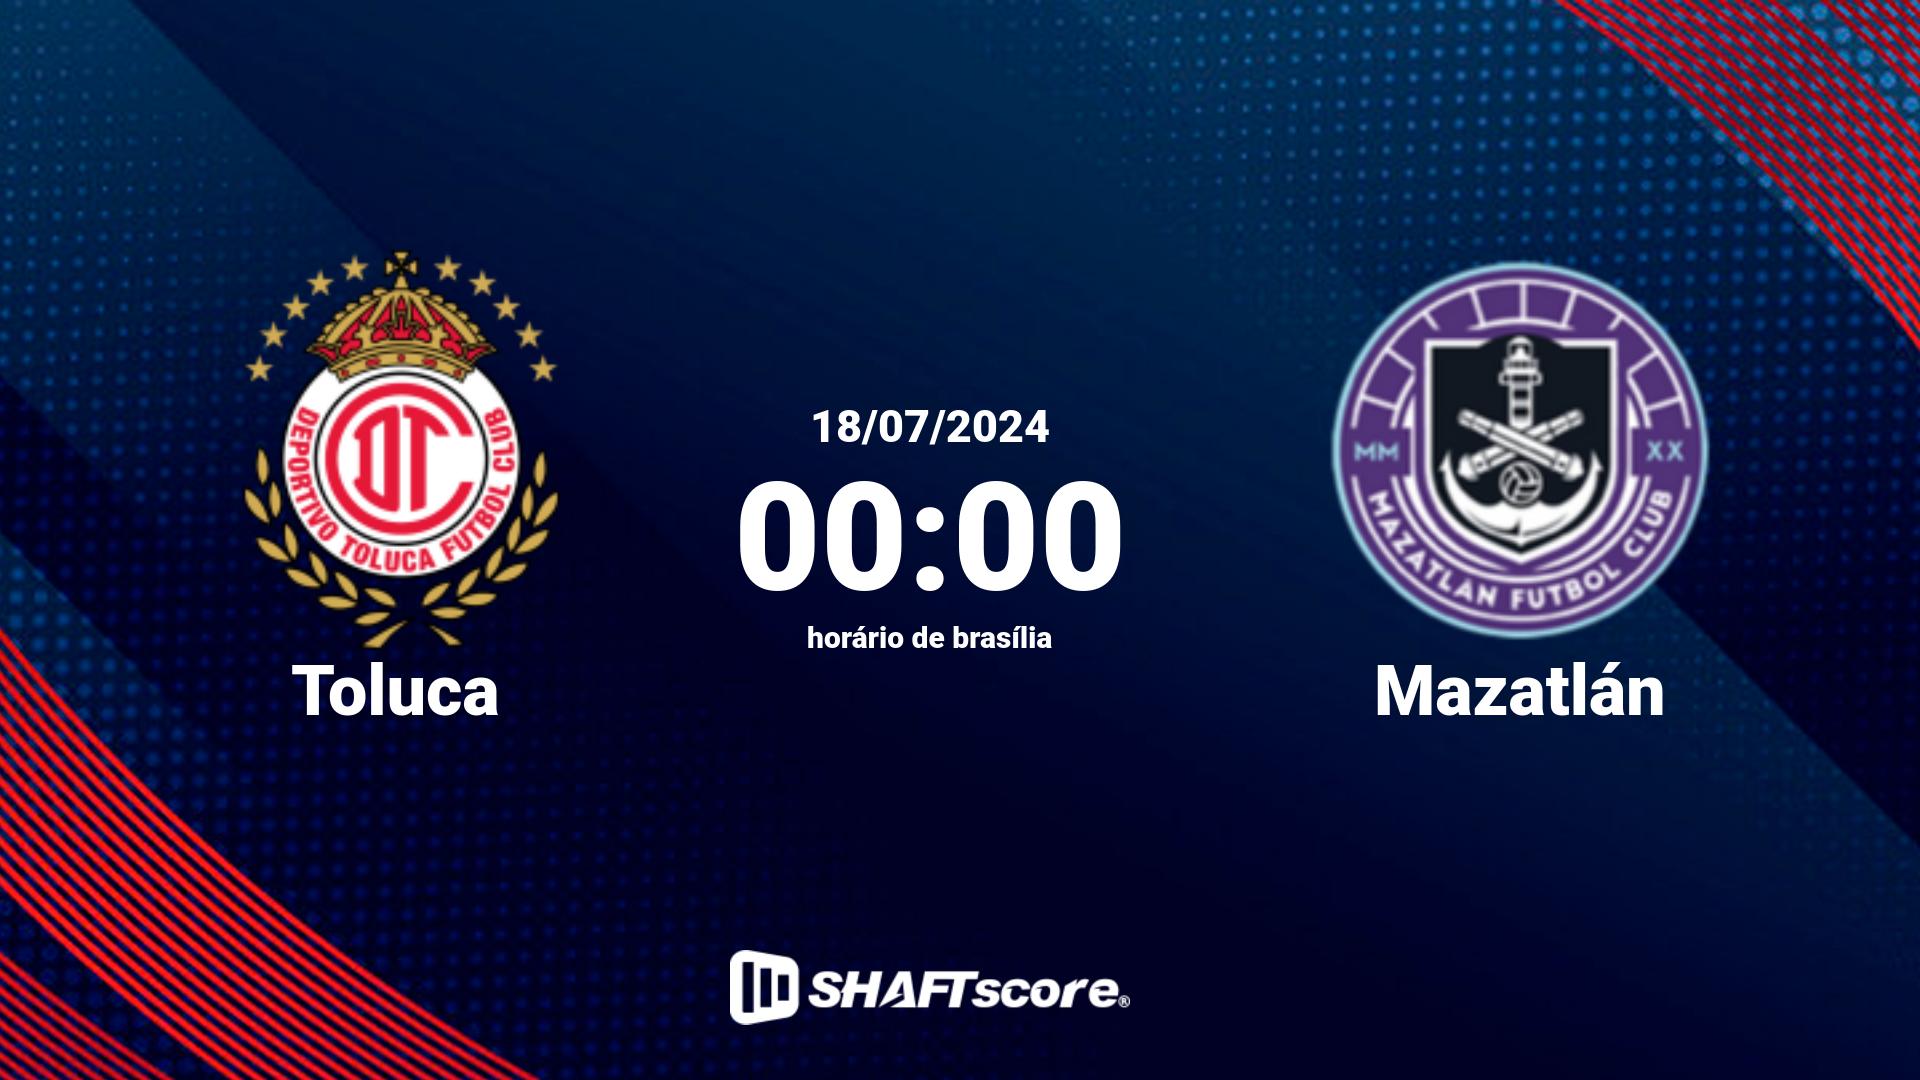 Estatísticas do jogo Toluca vs Mazatlán 18.07 00:00